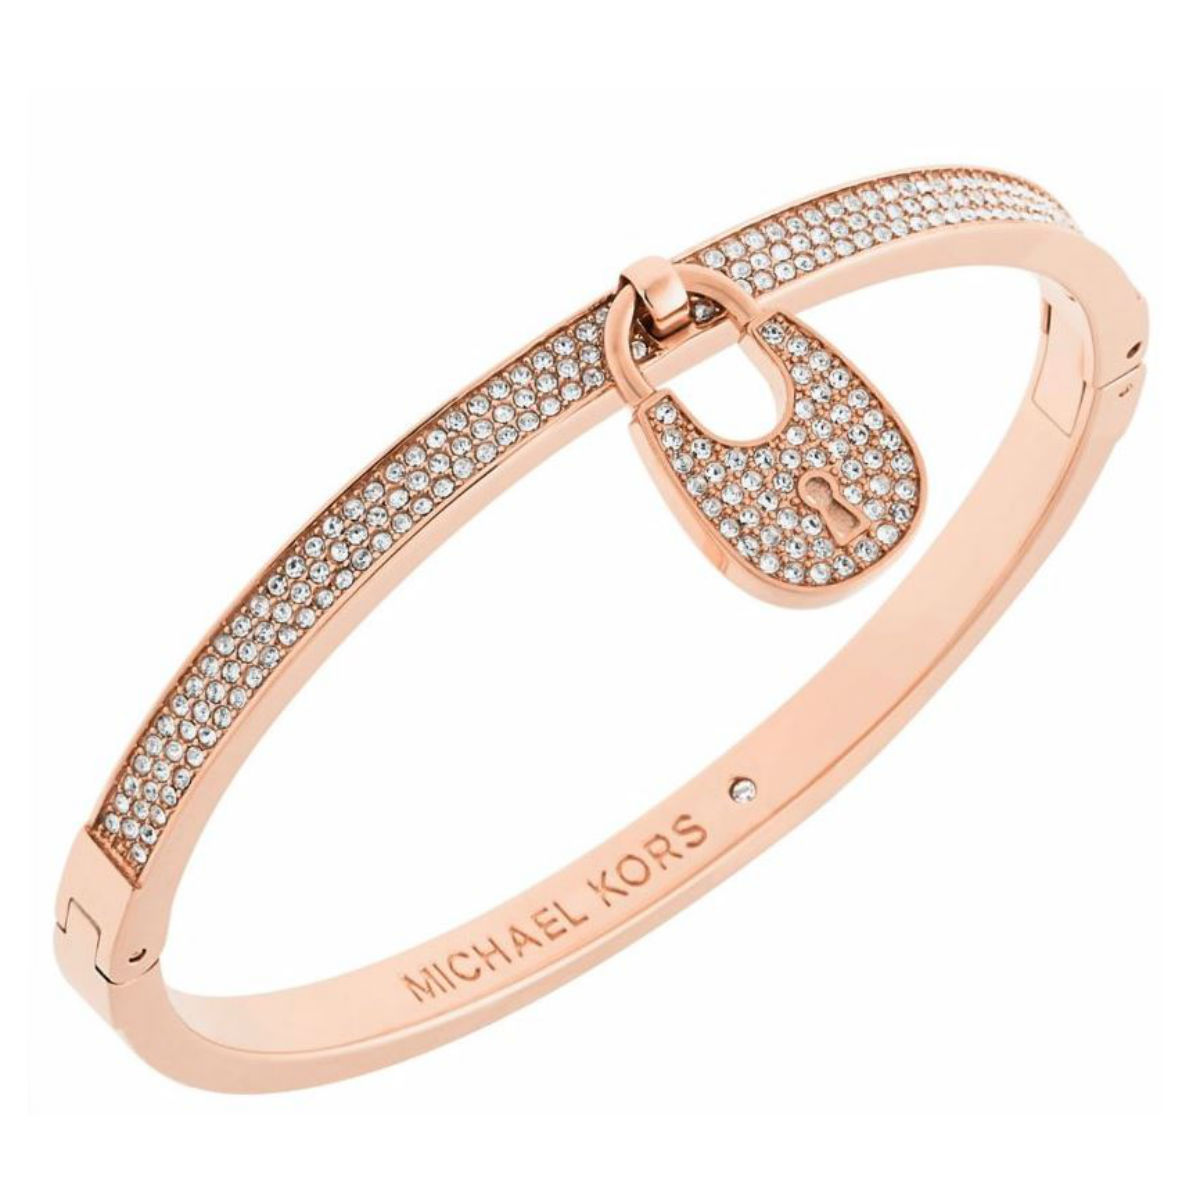 Michael Kors padlock bracelet